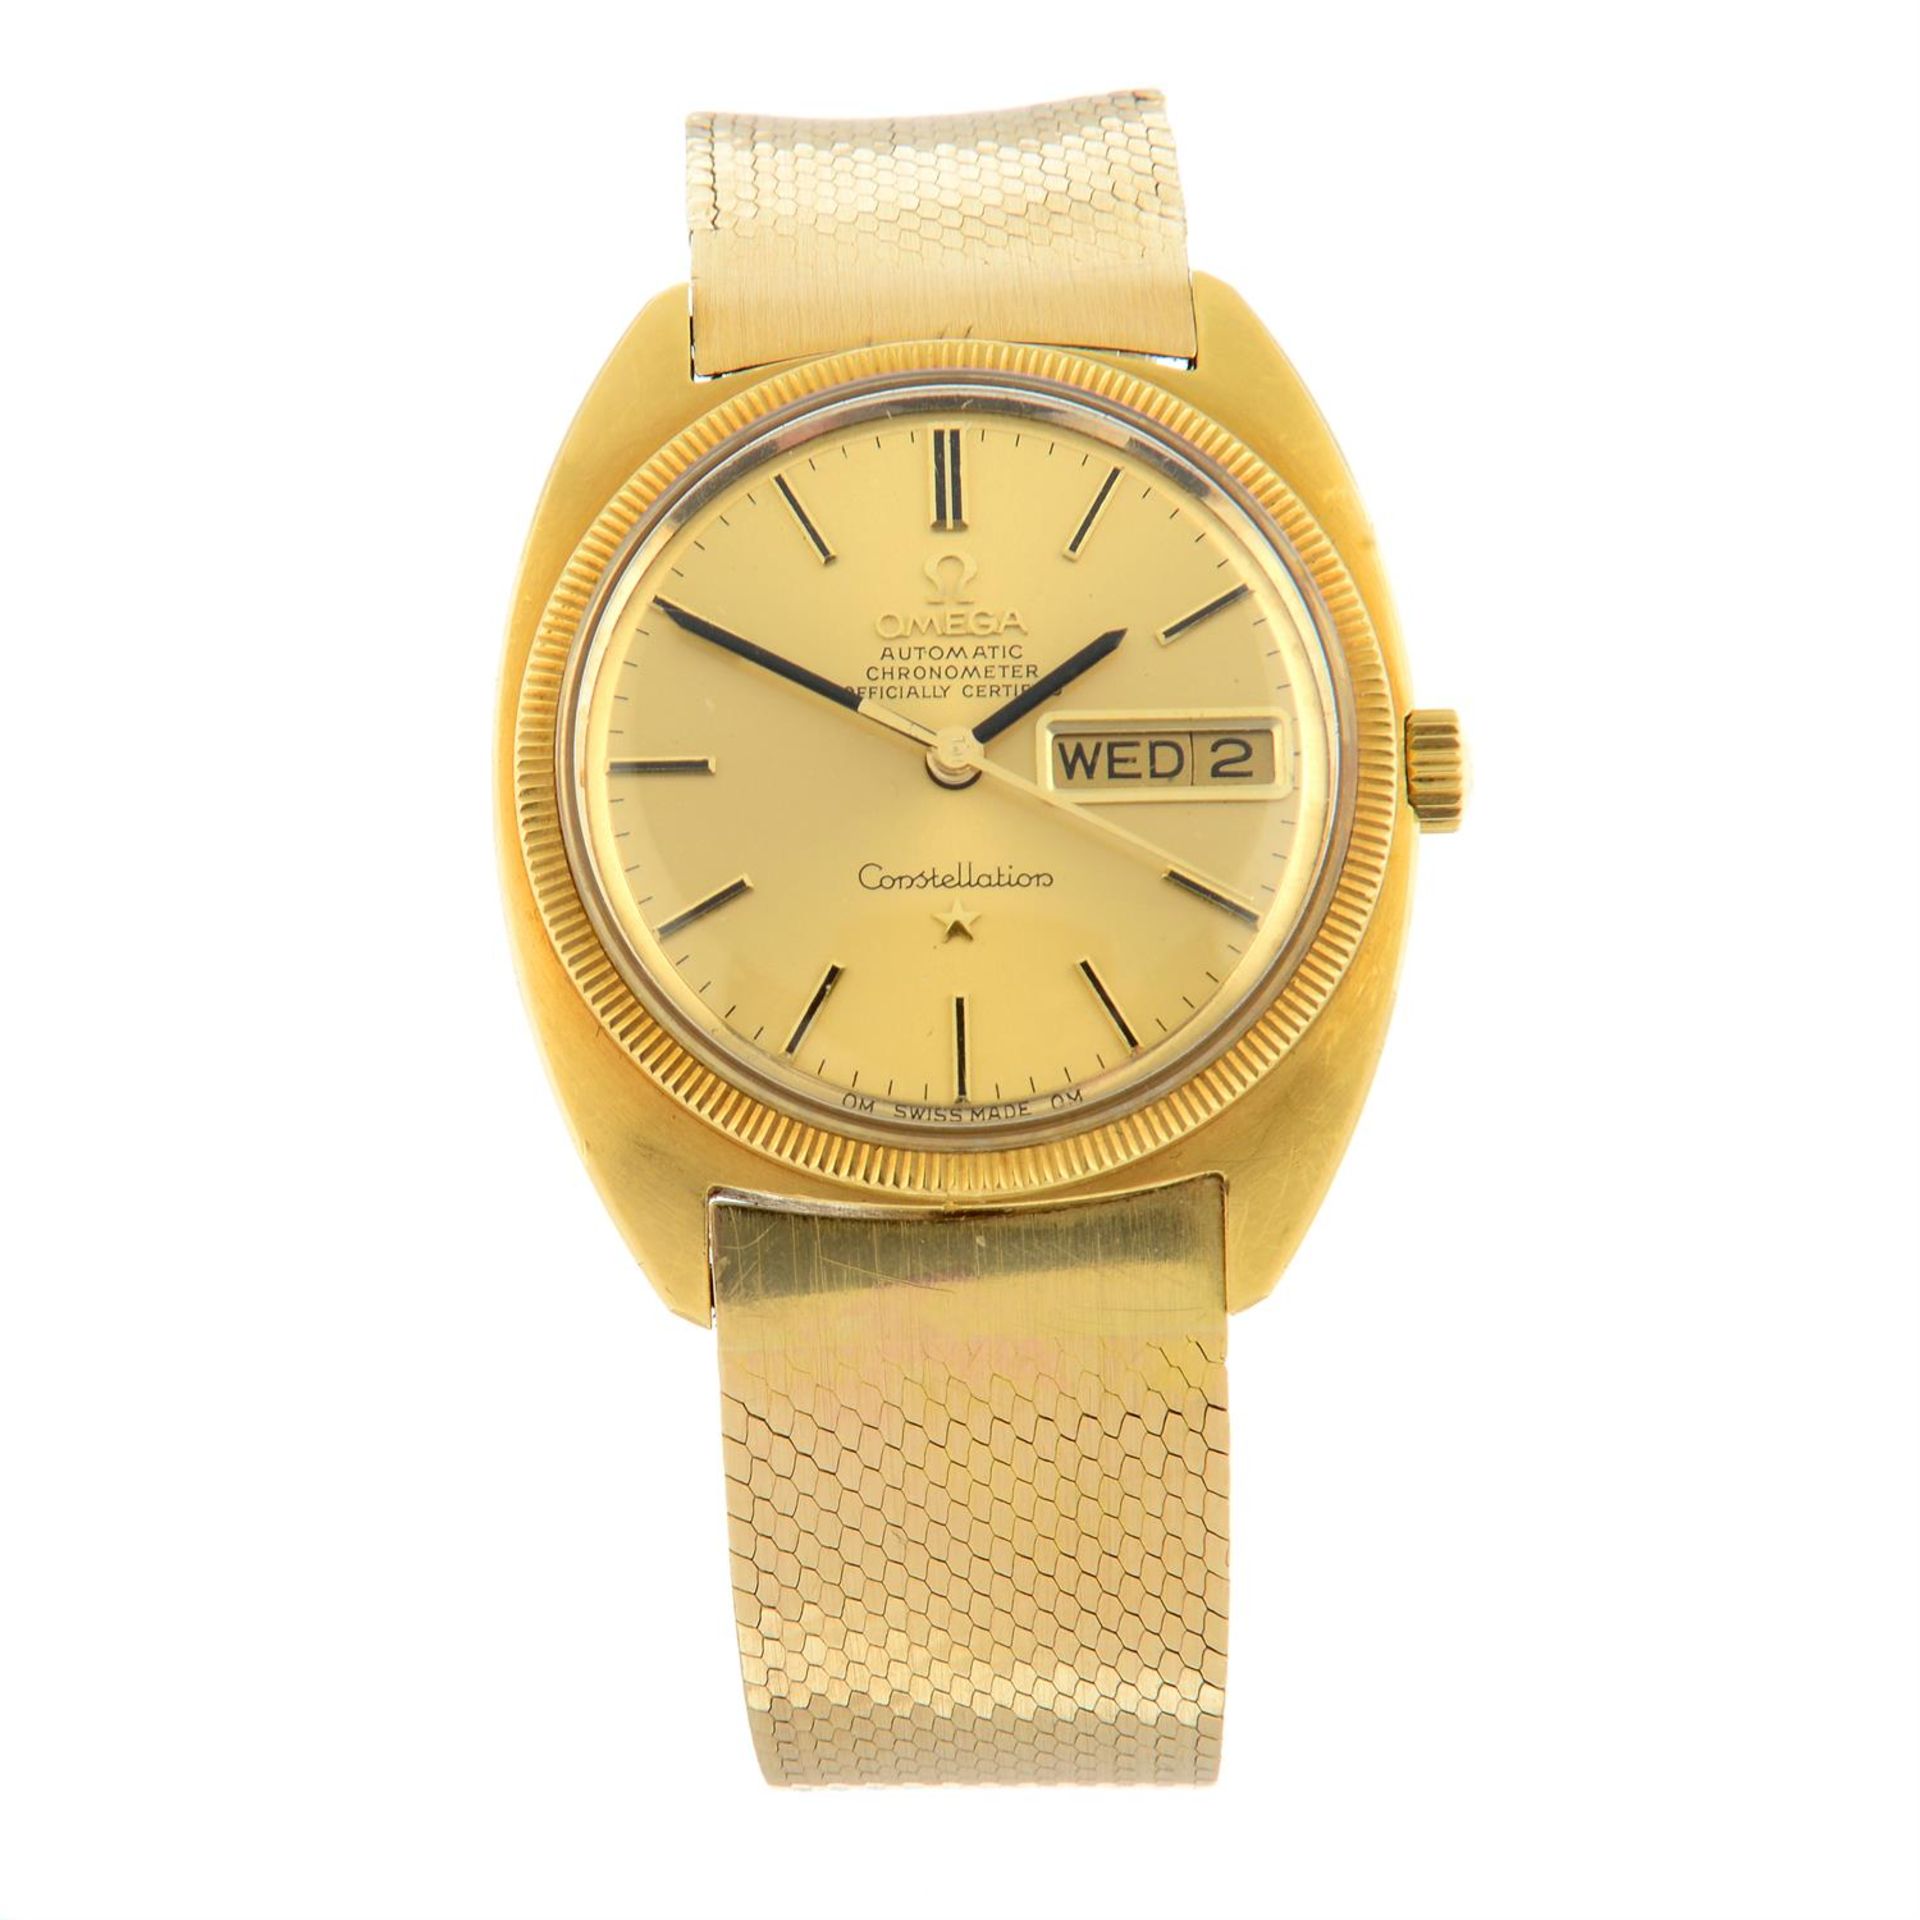 OMEGA - a yellow metal Constellation bracelet watch, 34mm.